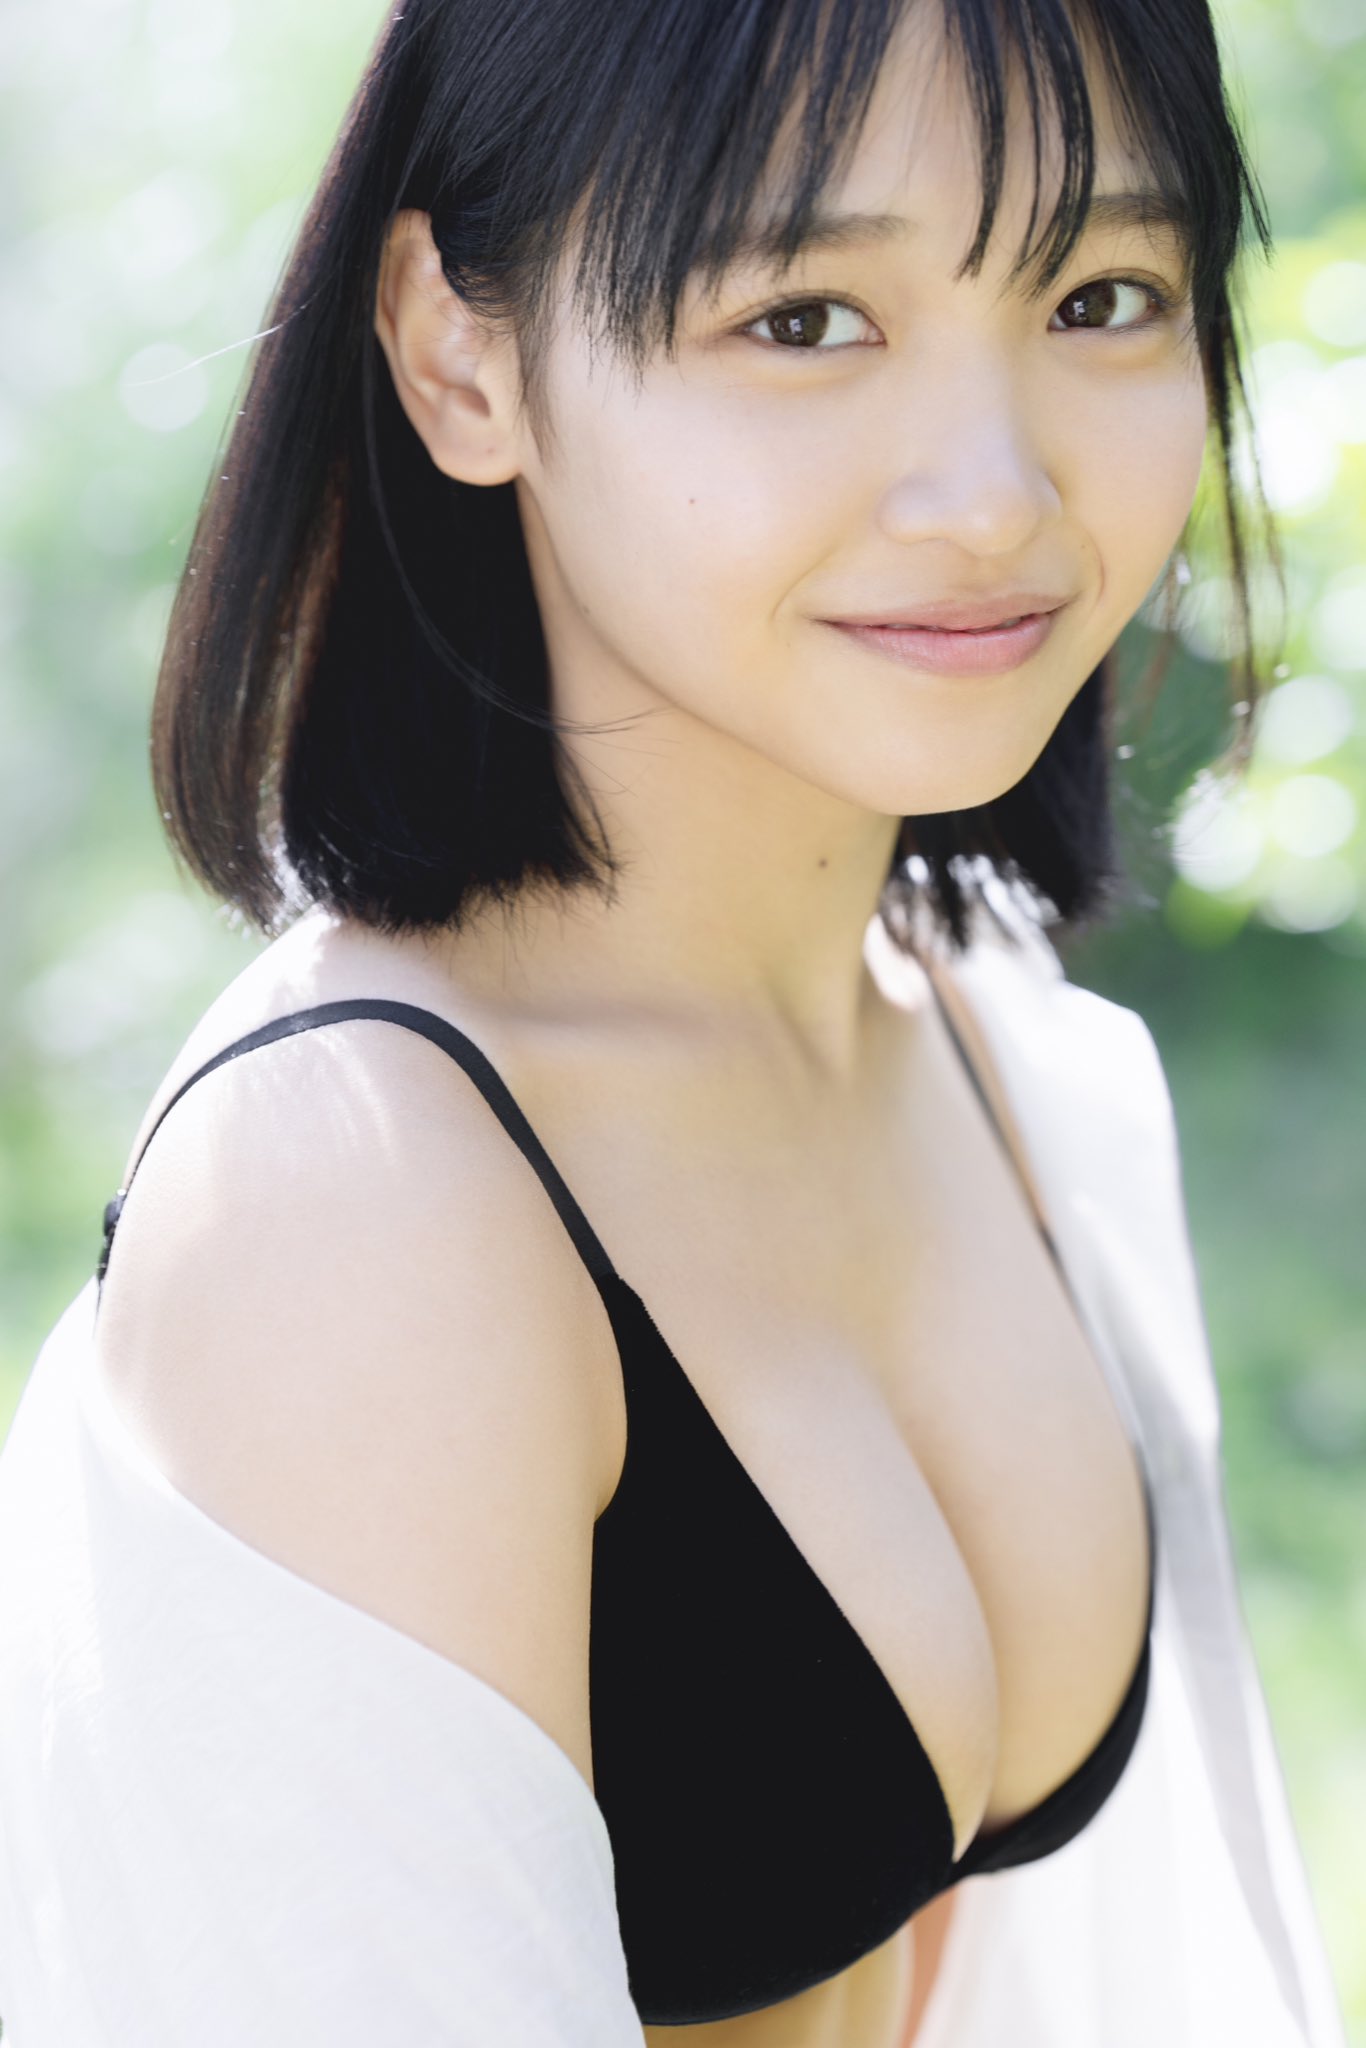 Japanese rookie gravure model KIUCHI NOAH was born in 2005